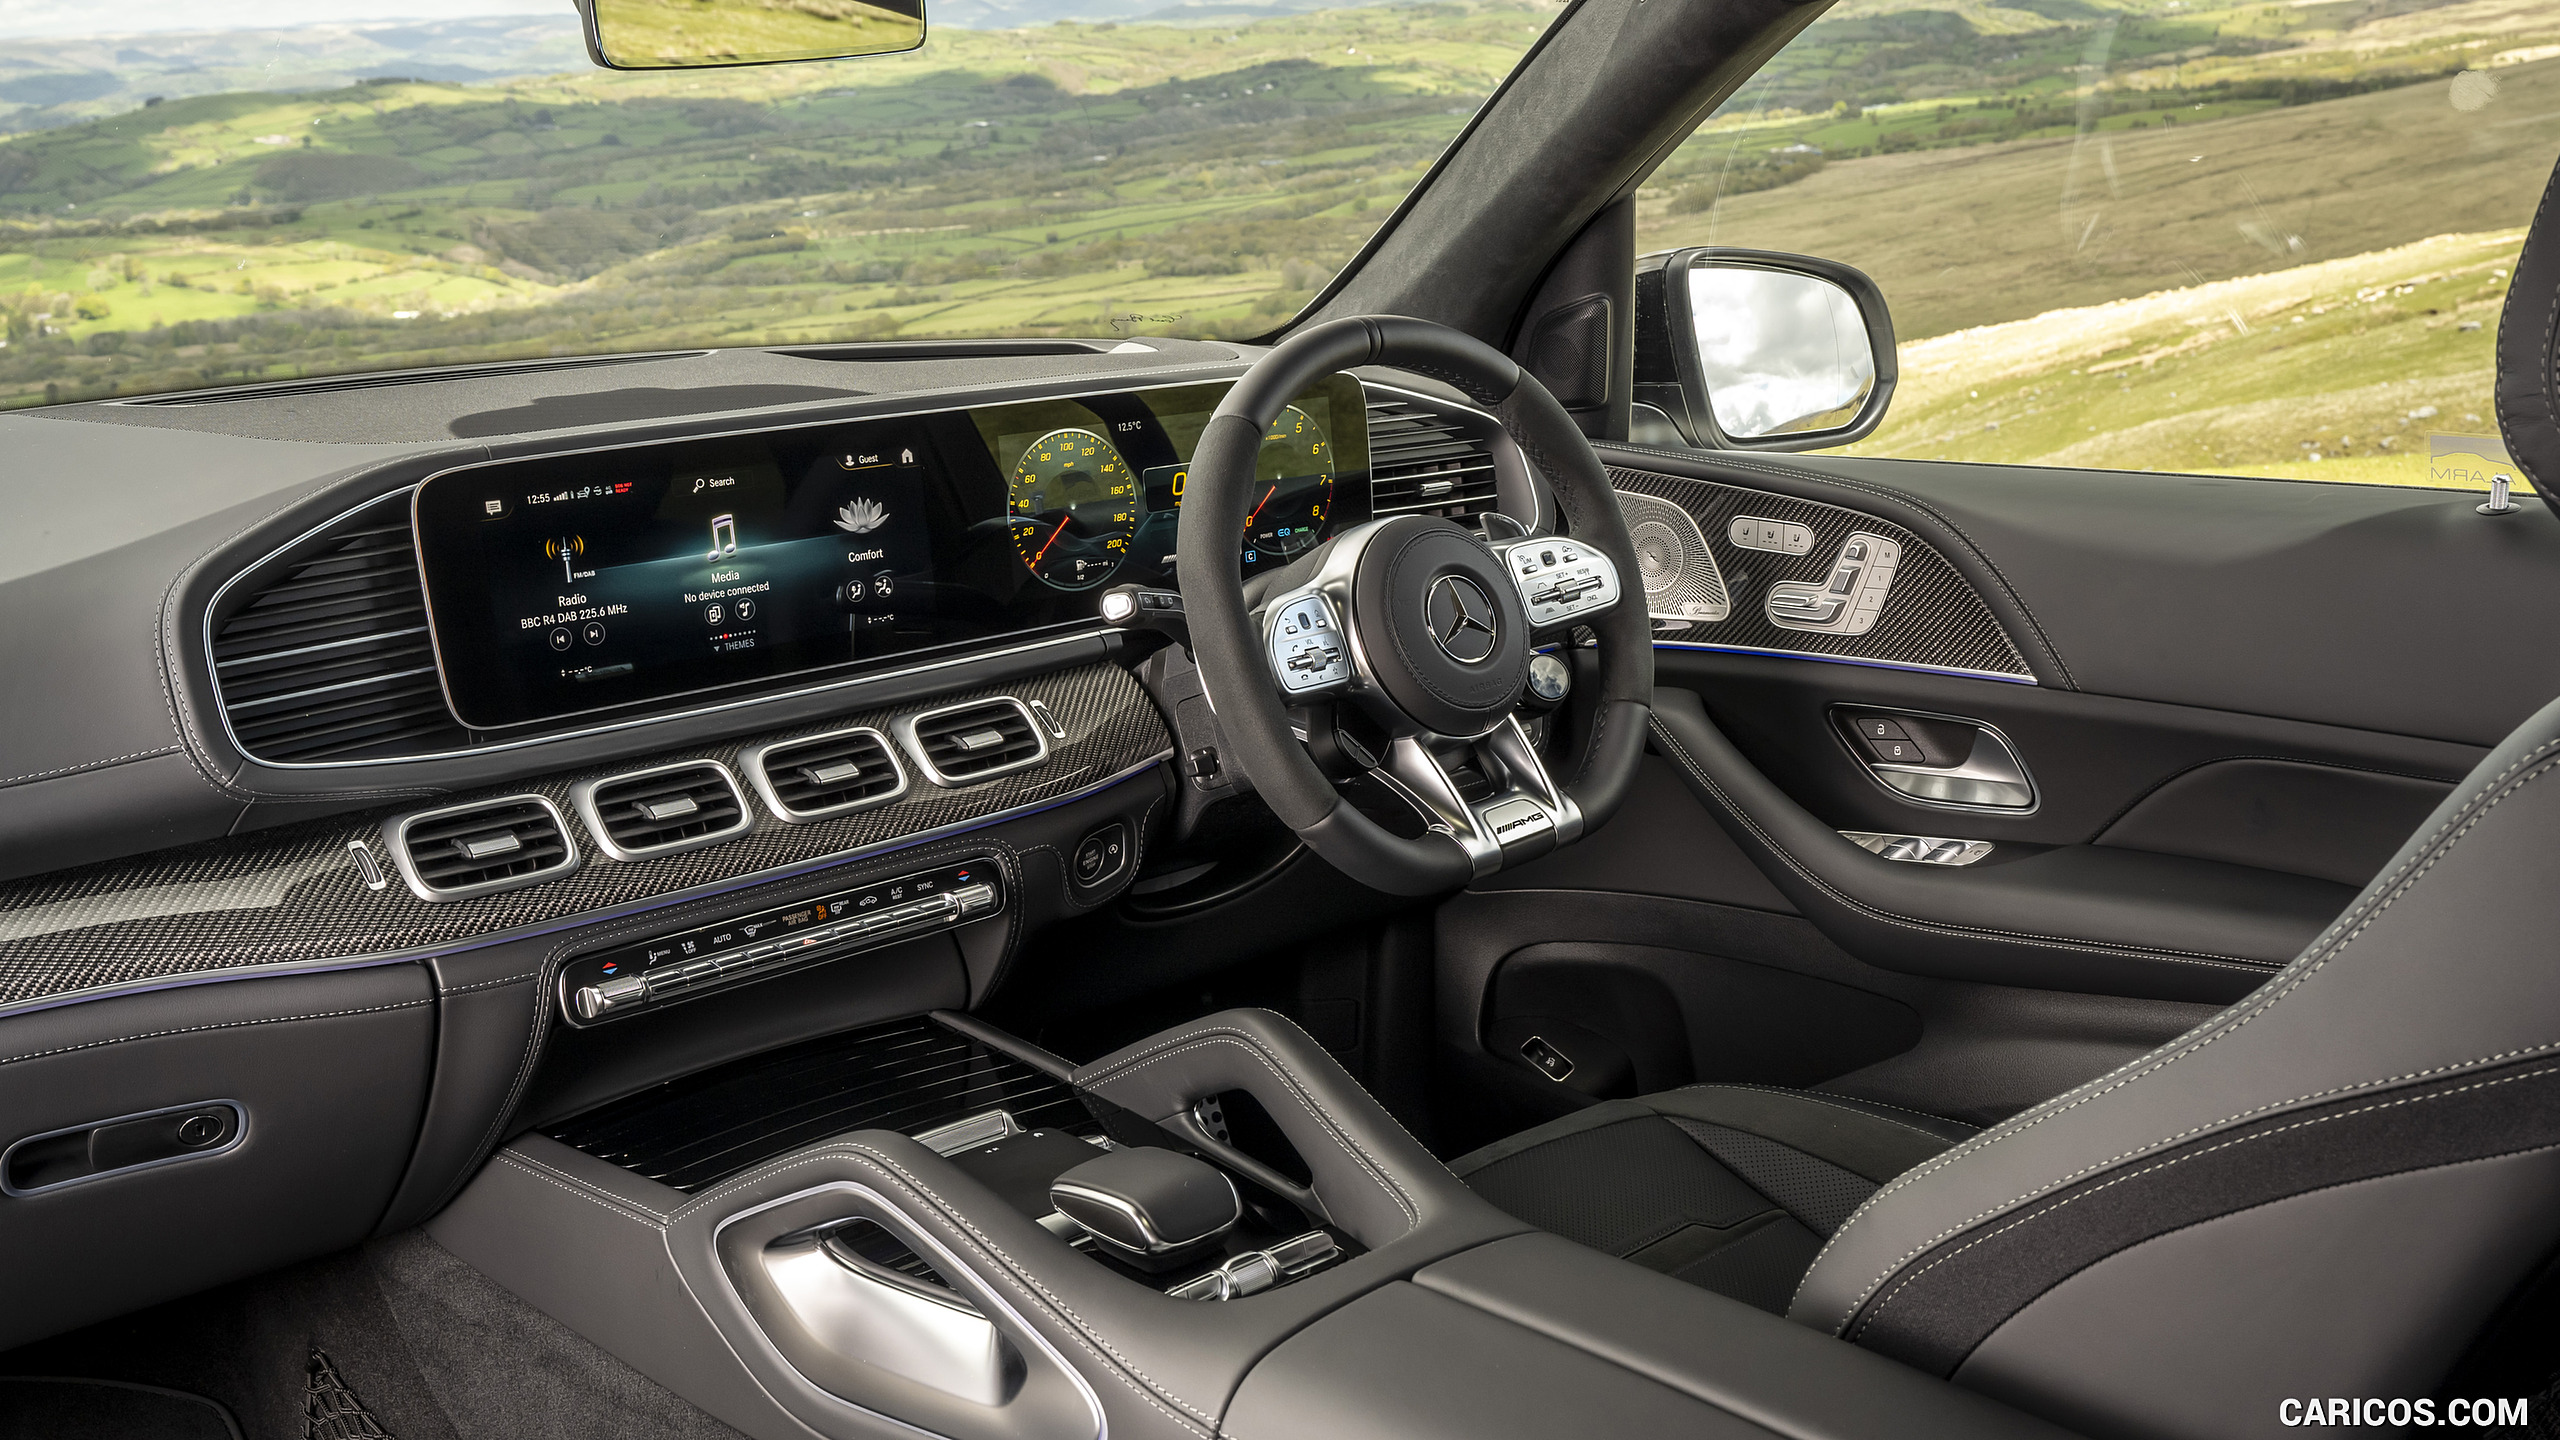 2021 Mercedes-AMG GLE 63 S 4MATIC (UK-Spec) - Interior, #159 of 187